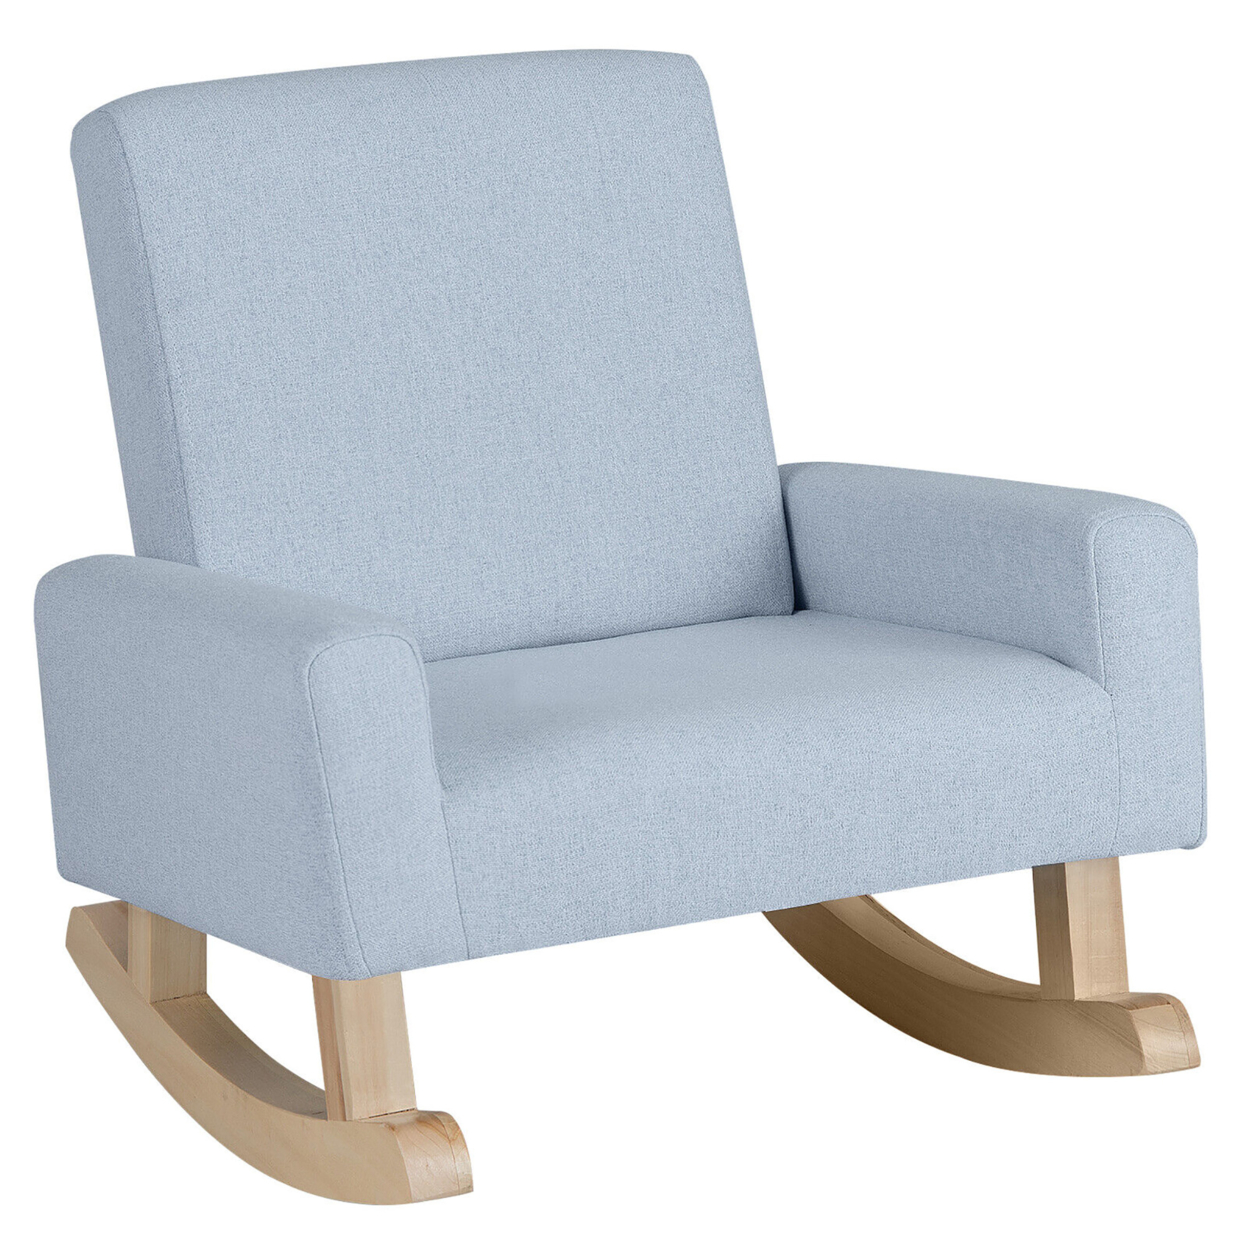 Kids Rocking Chair Children Armchair Linen Upholstered Sofa W/ Solid Wood Legs - Blue